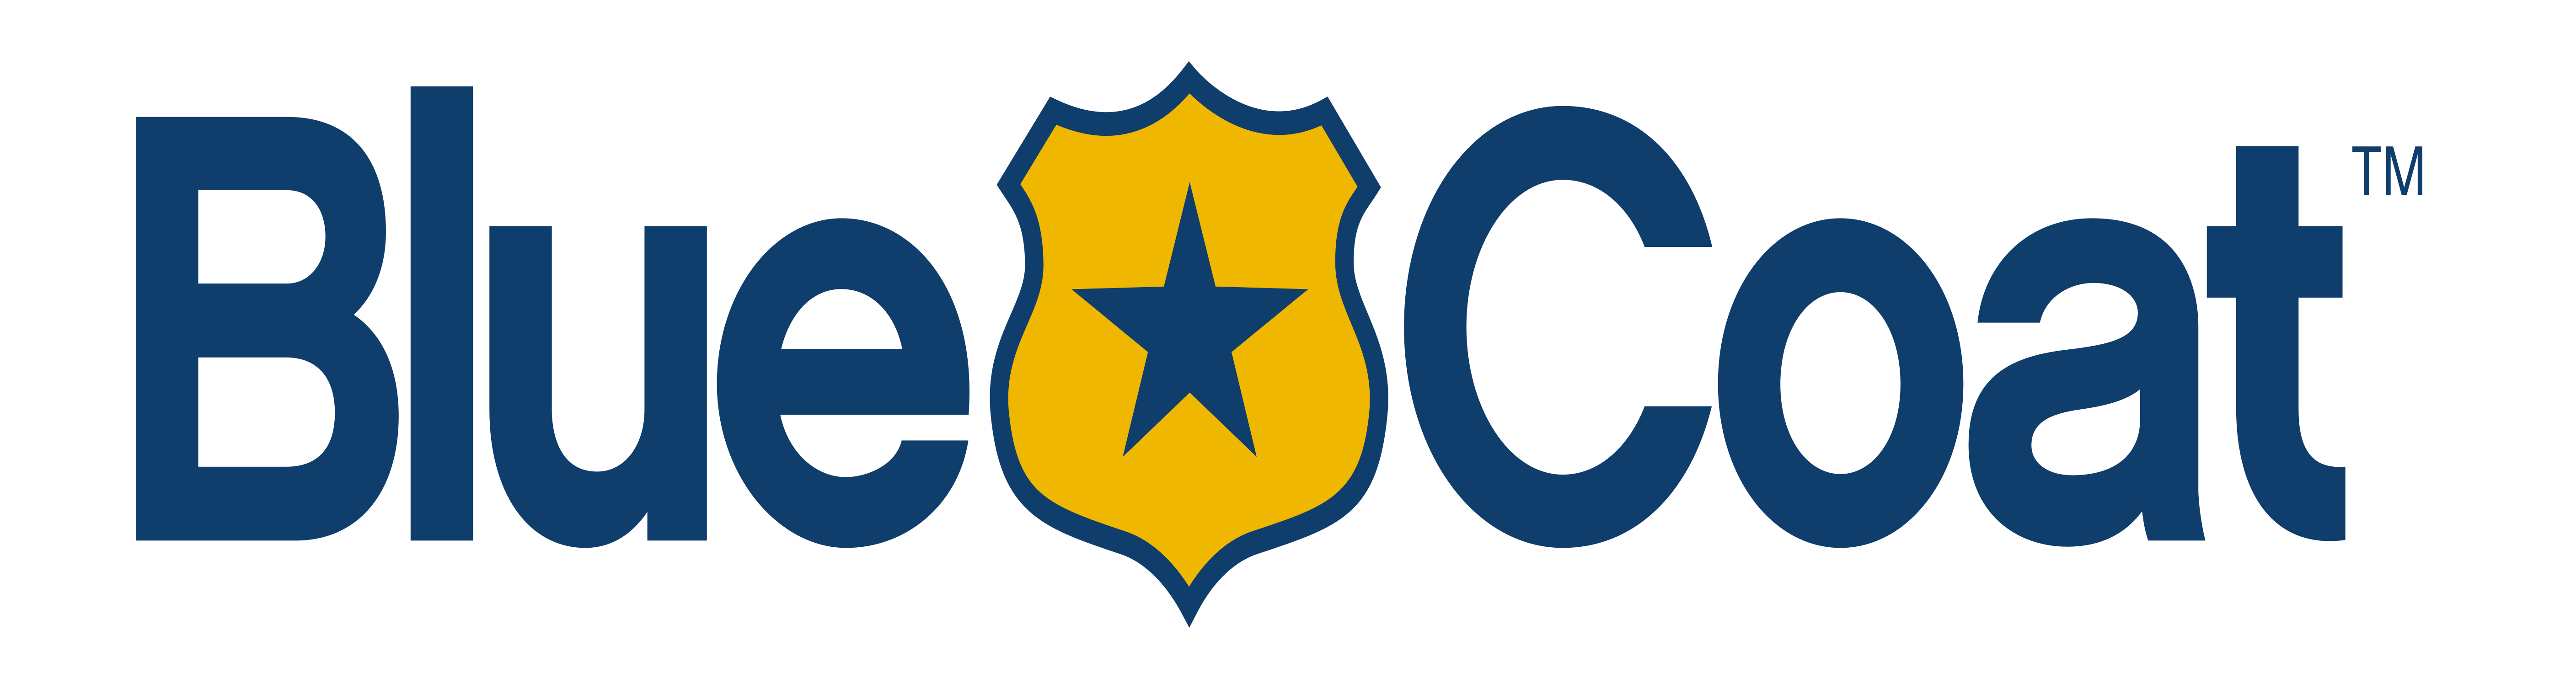 Blue-coat_Logo